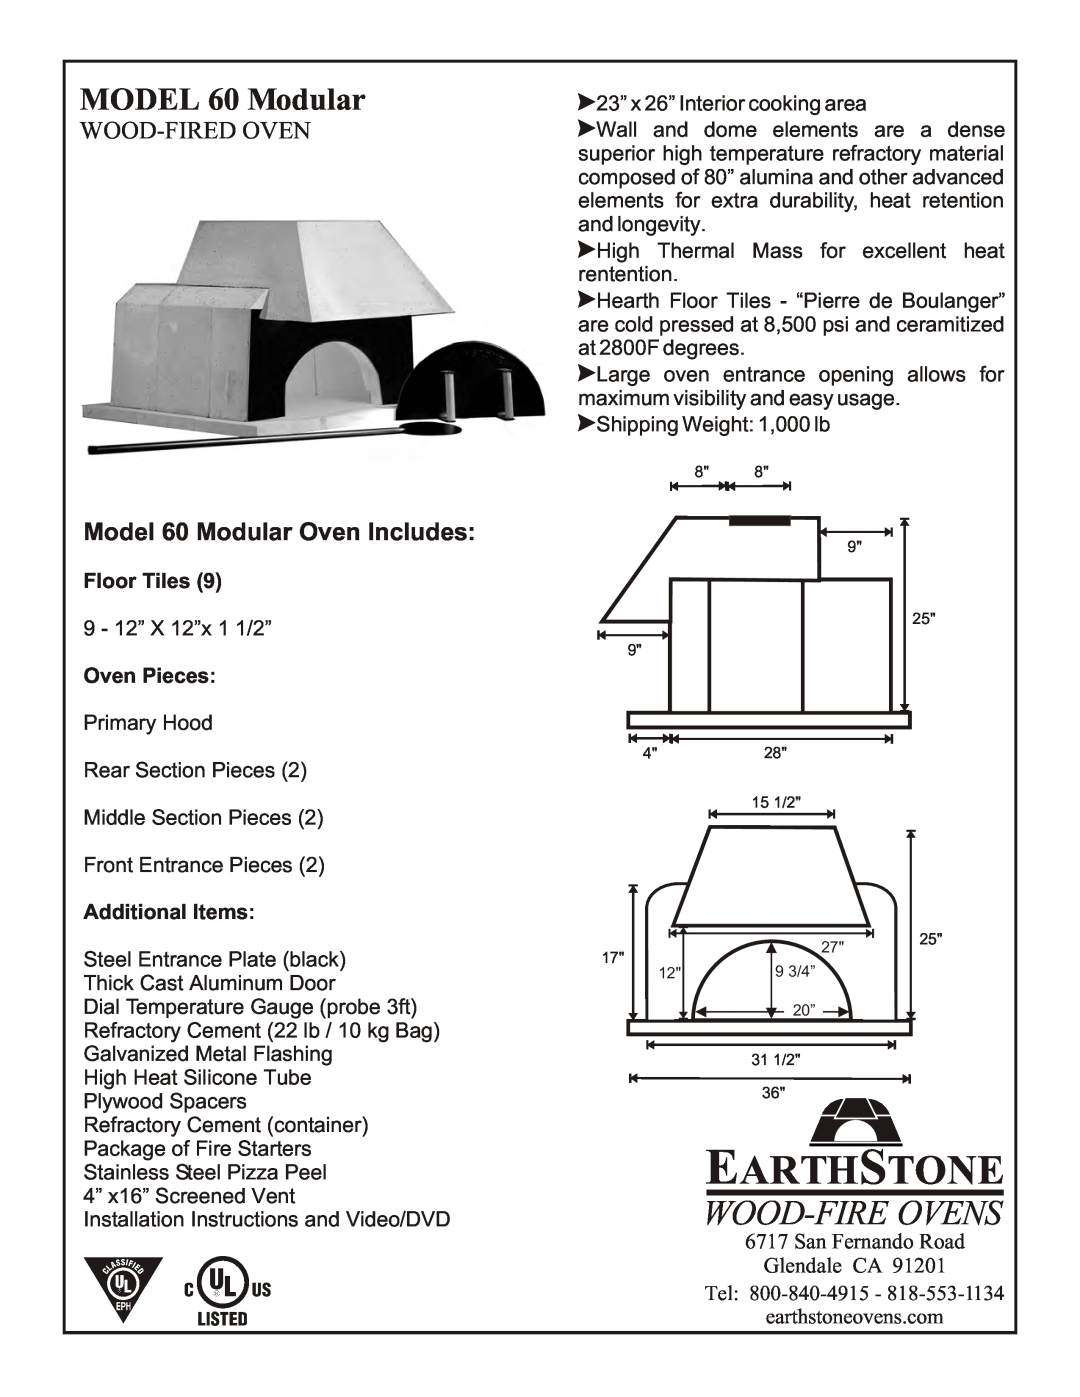 EarthStone installation instructions Earthstone, MODEL 60 Modular, Wood-Firedoven, San Fernando Road Glendale CA 